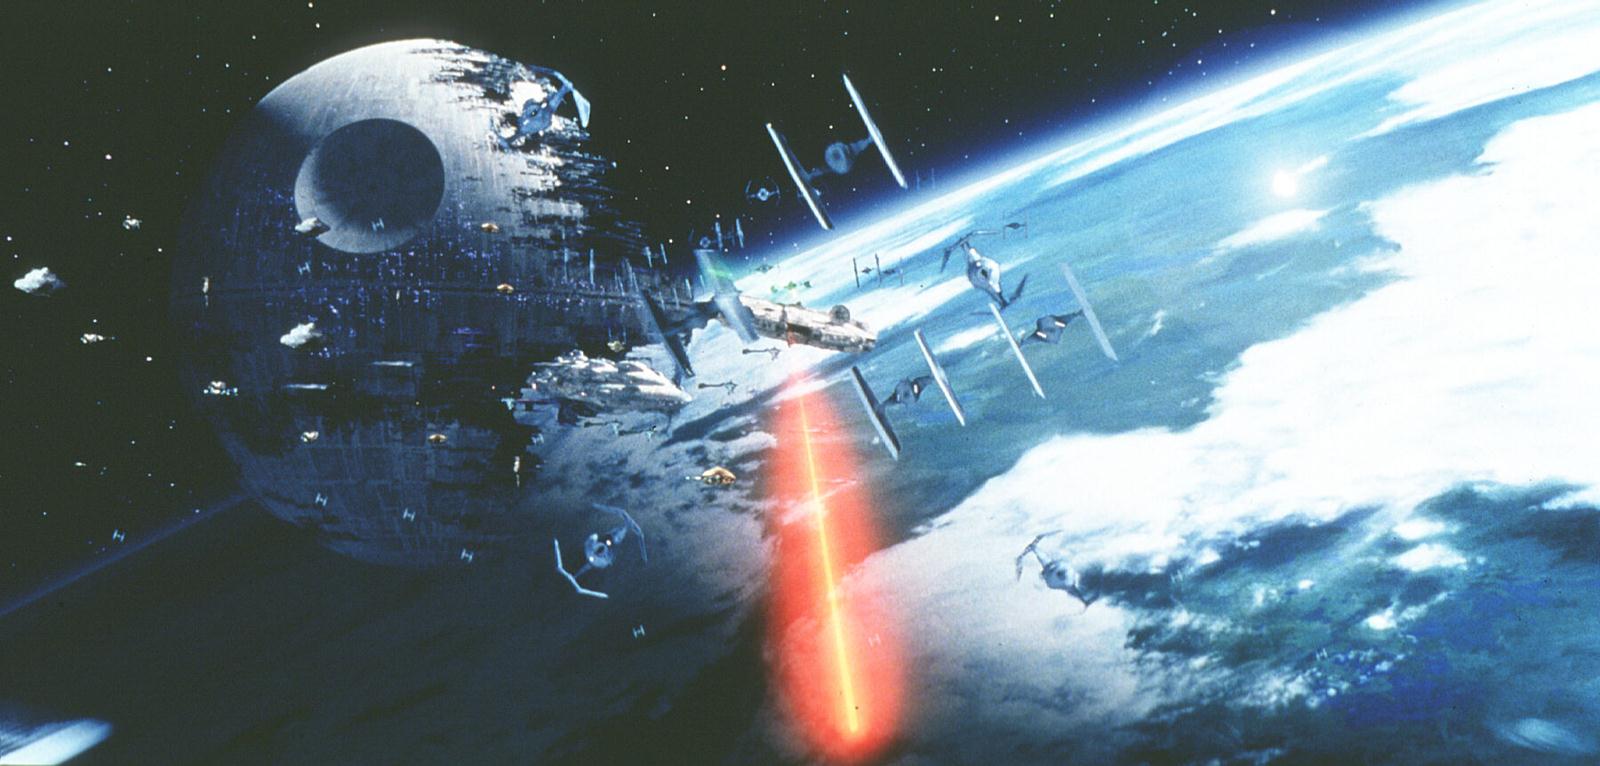 Return Of The Jedi: Death Star Battle #6